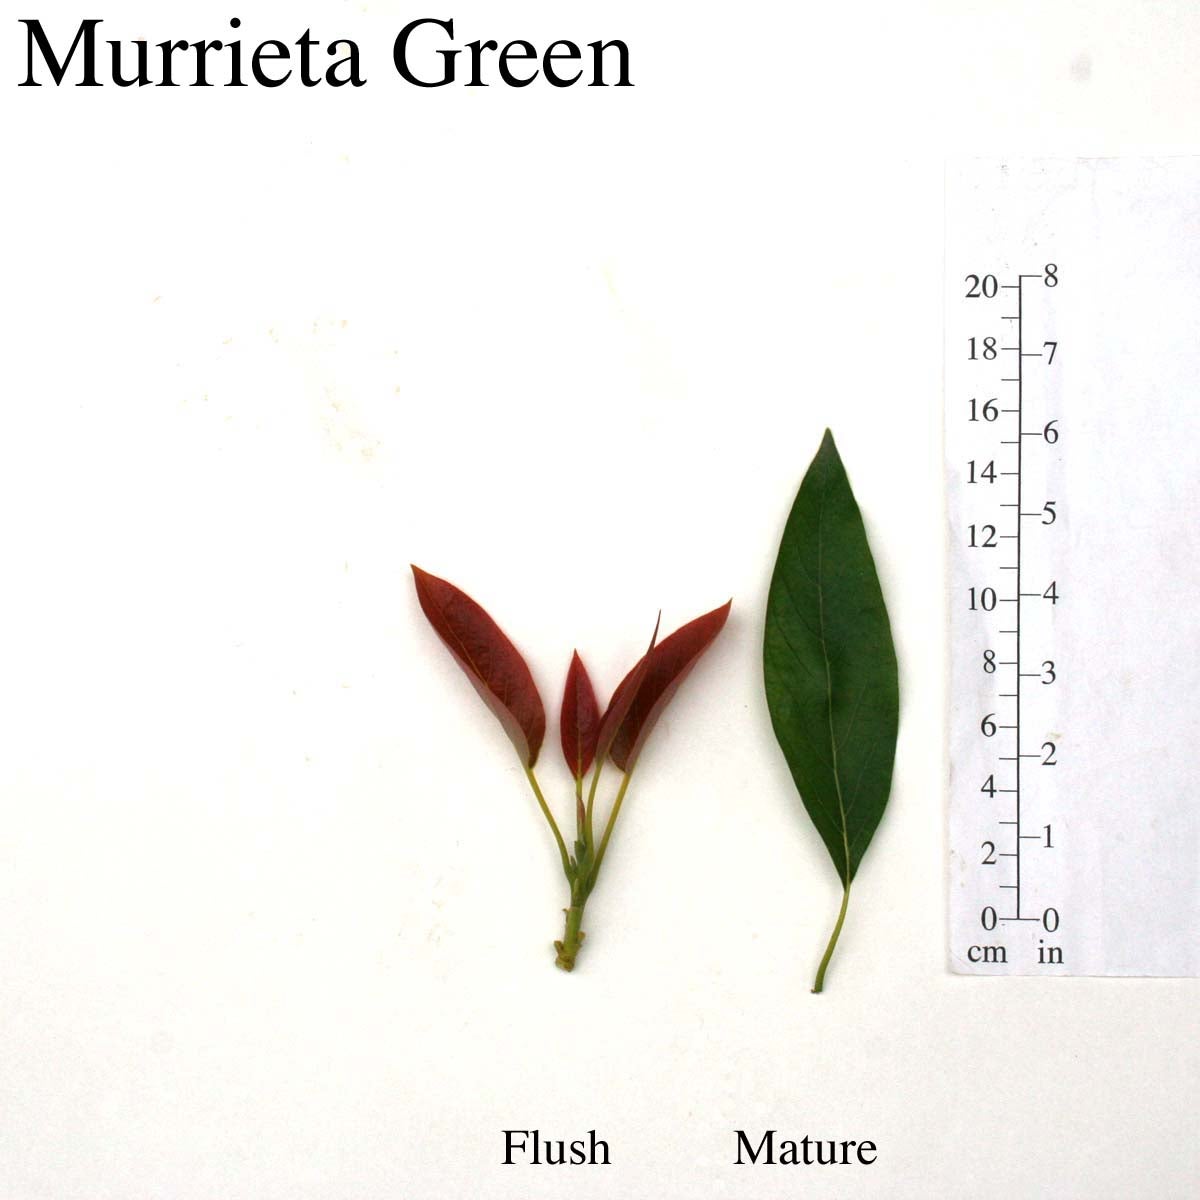 Murrieta Green Leaves